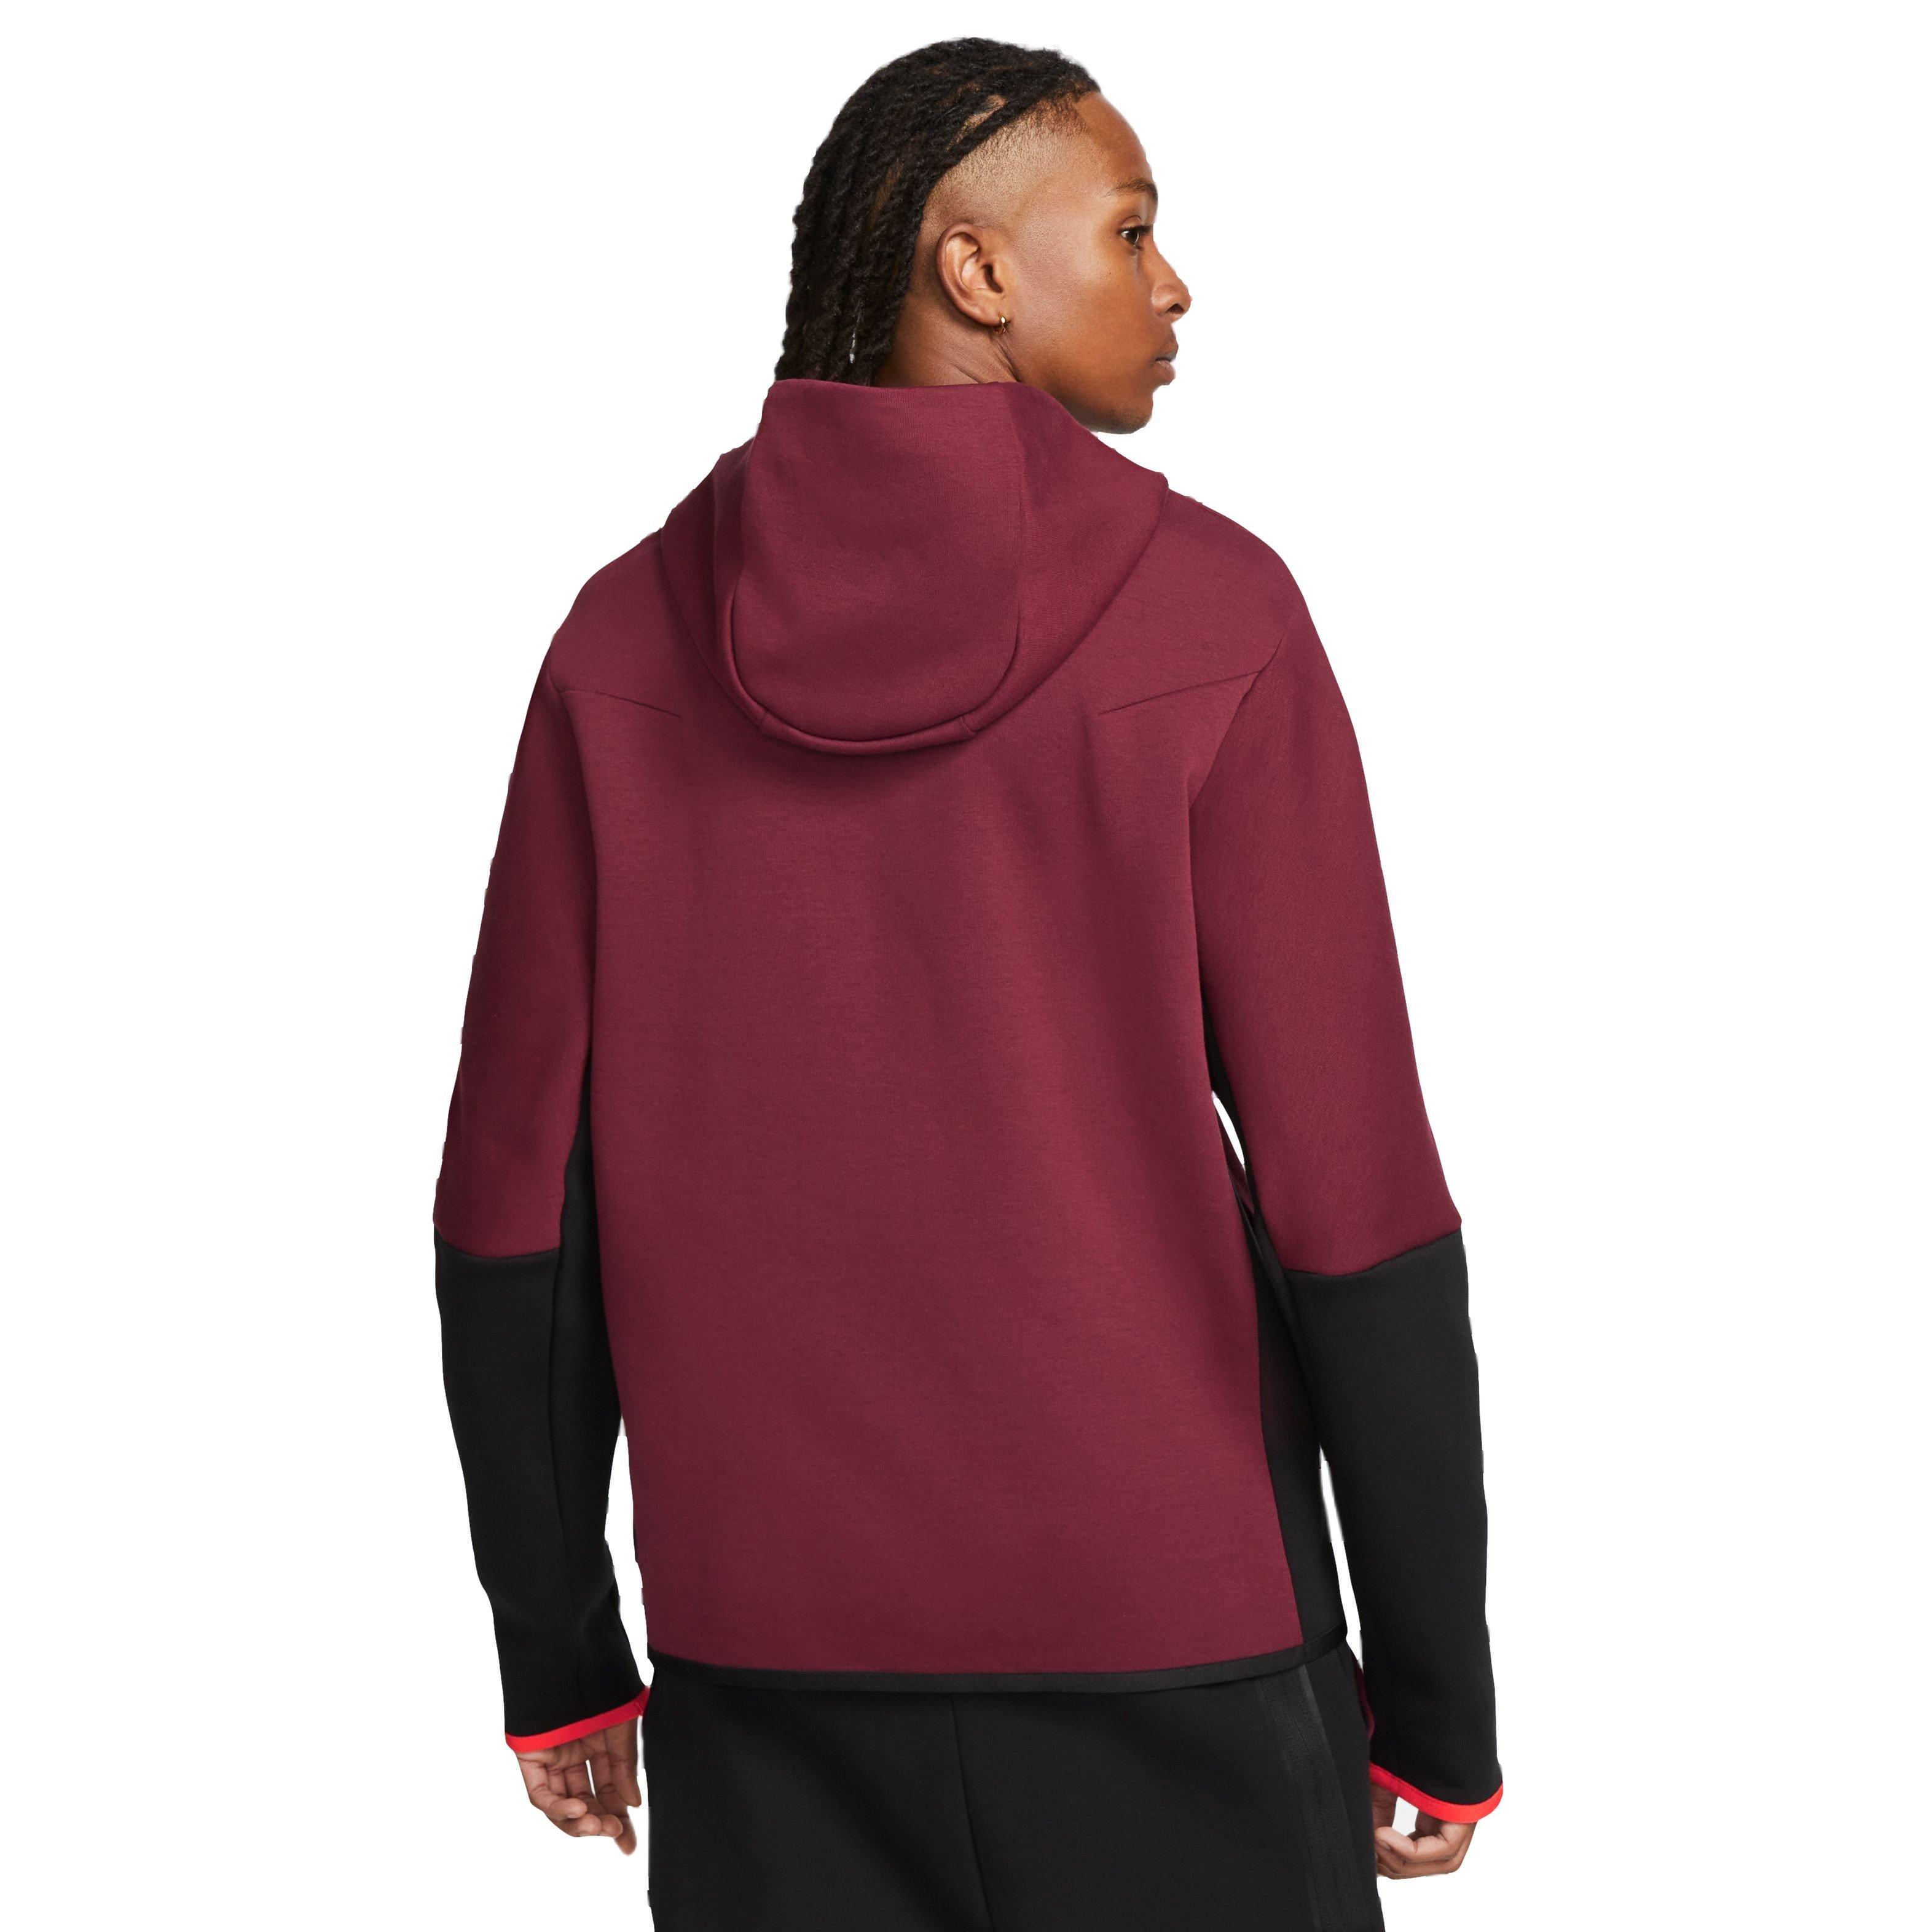 Aangenaam kennis te maken probleem breken Nike Men's Sportswear Tech Fleece Full-Zip Hoodie-Maroon